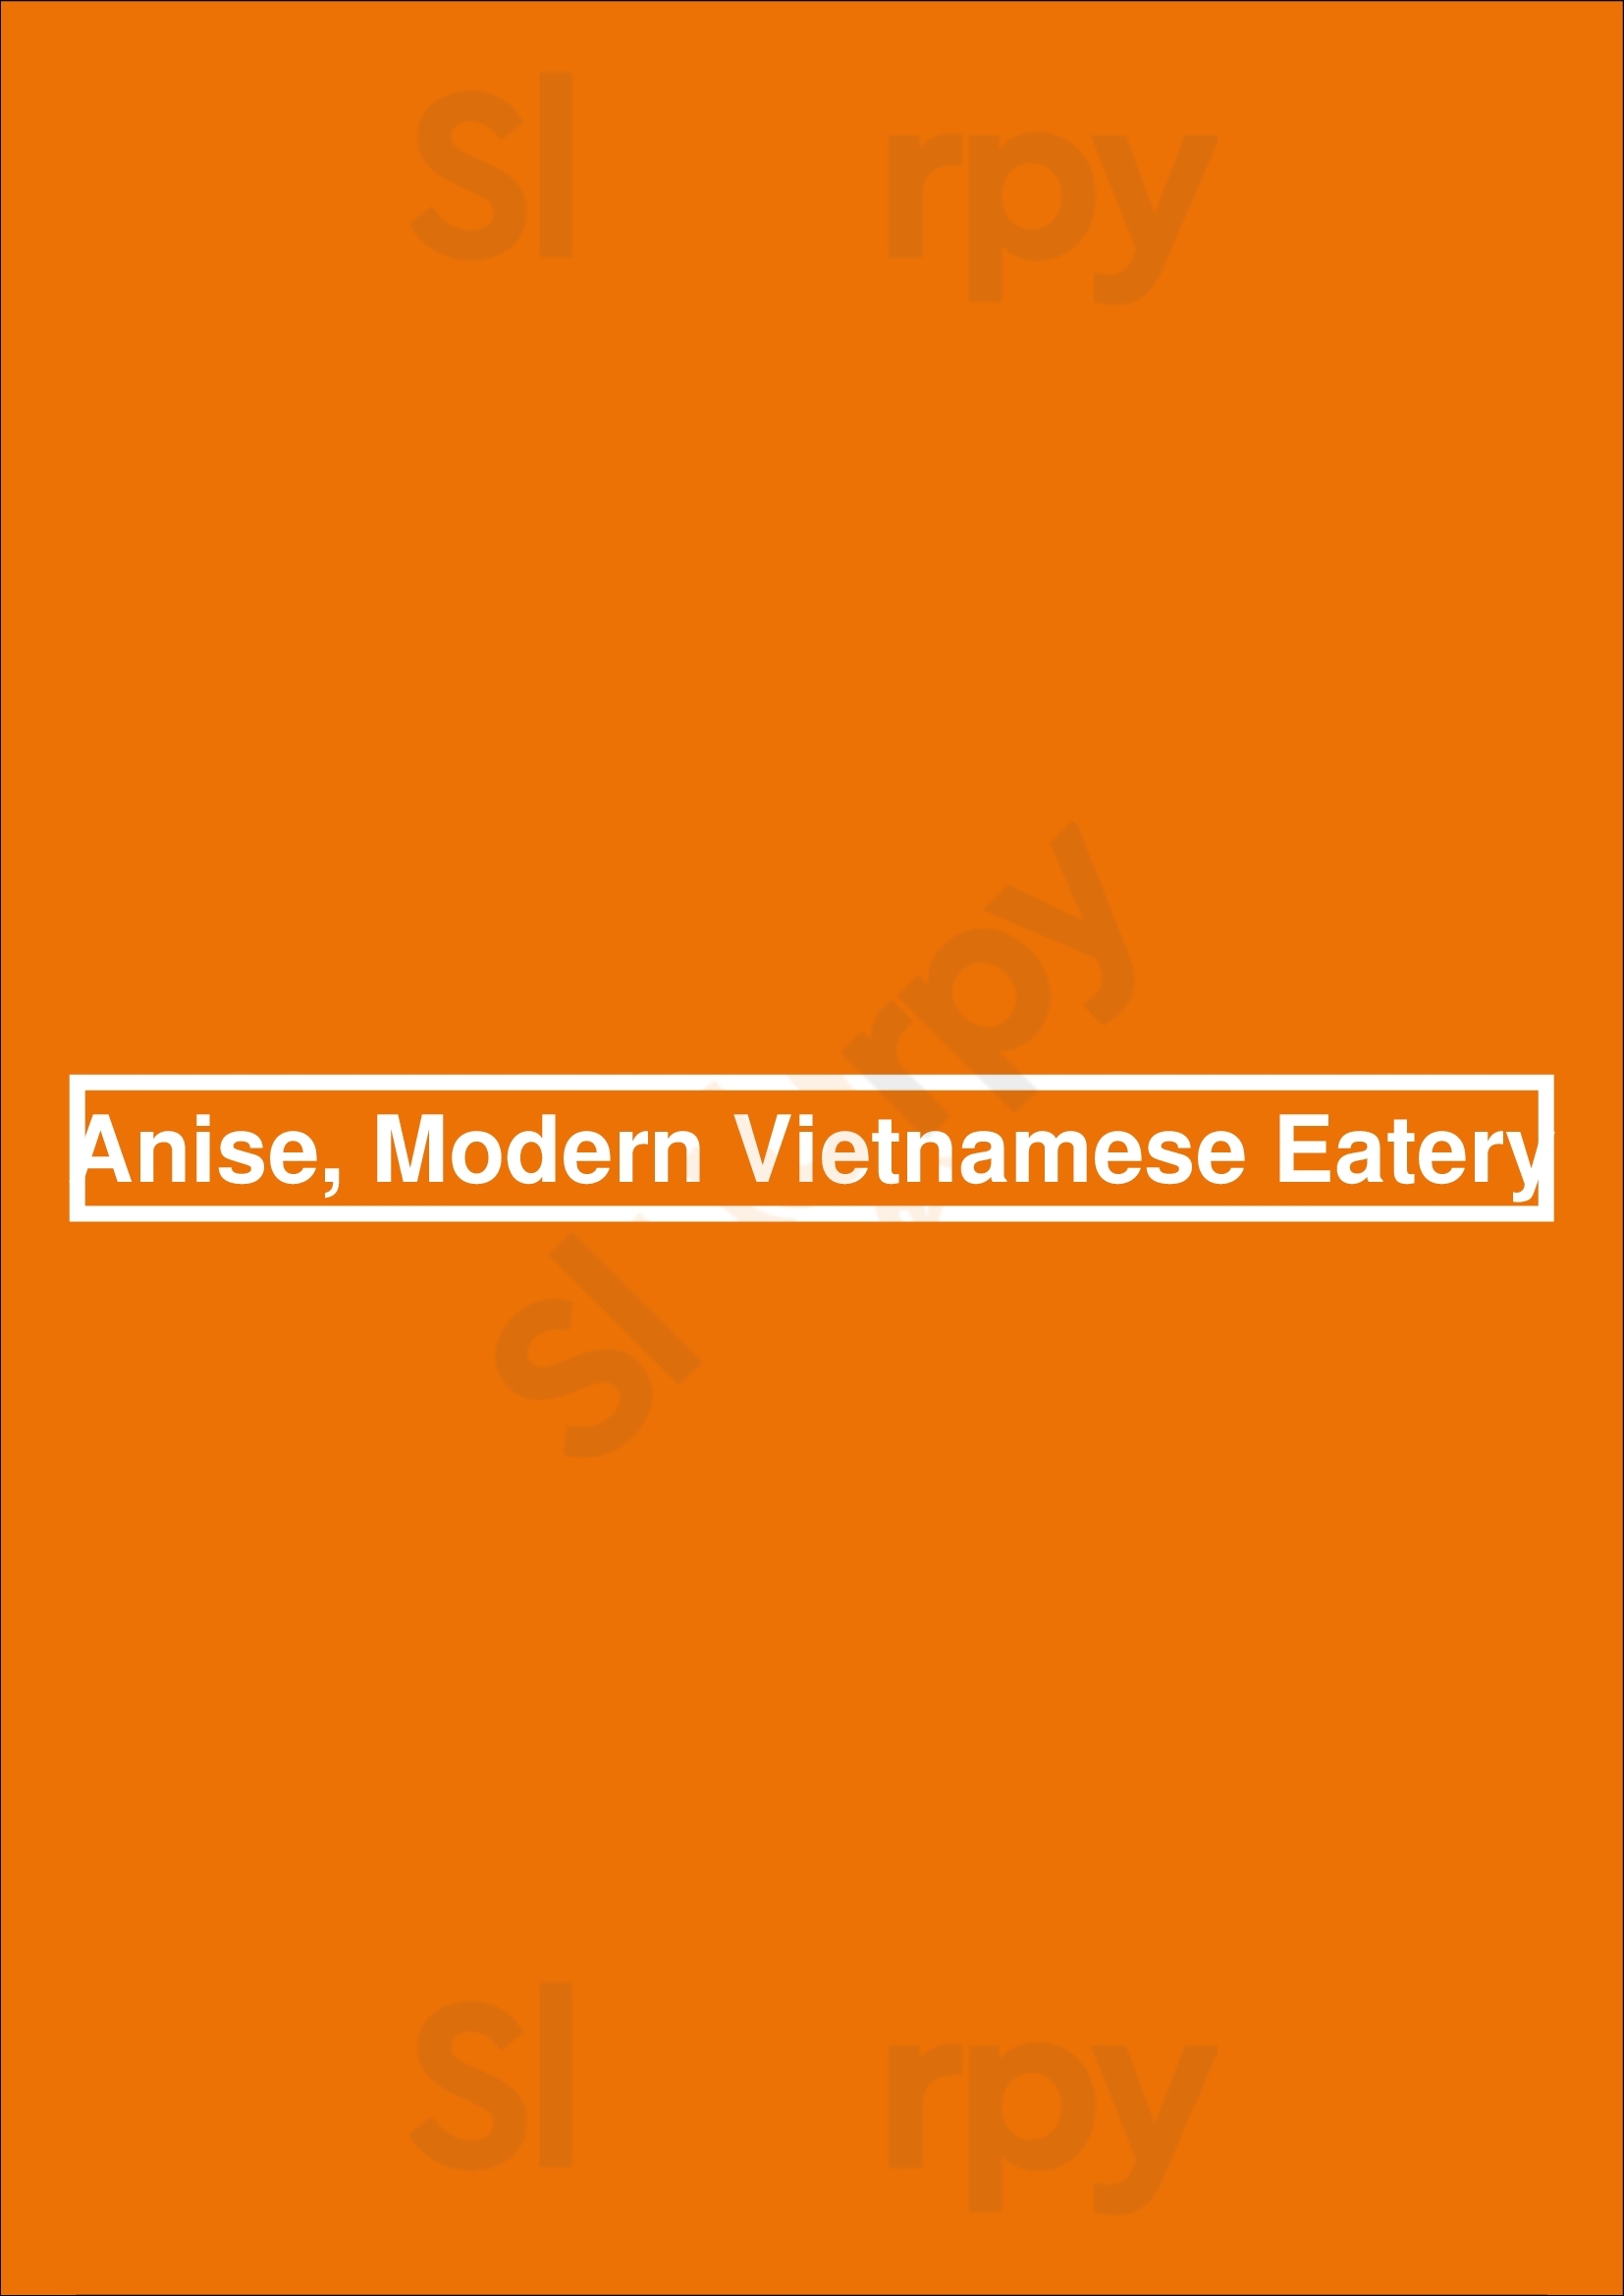 Anise, Modern Vietnamese Eatery Denver Menu - 1